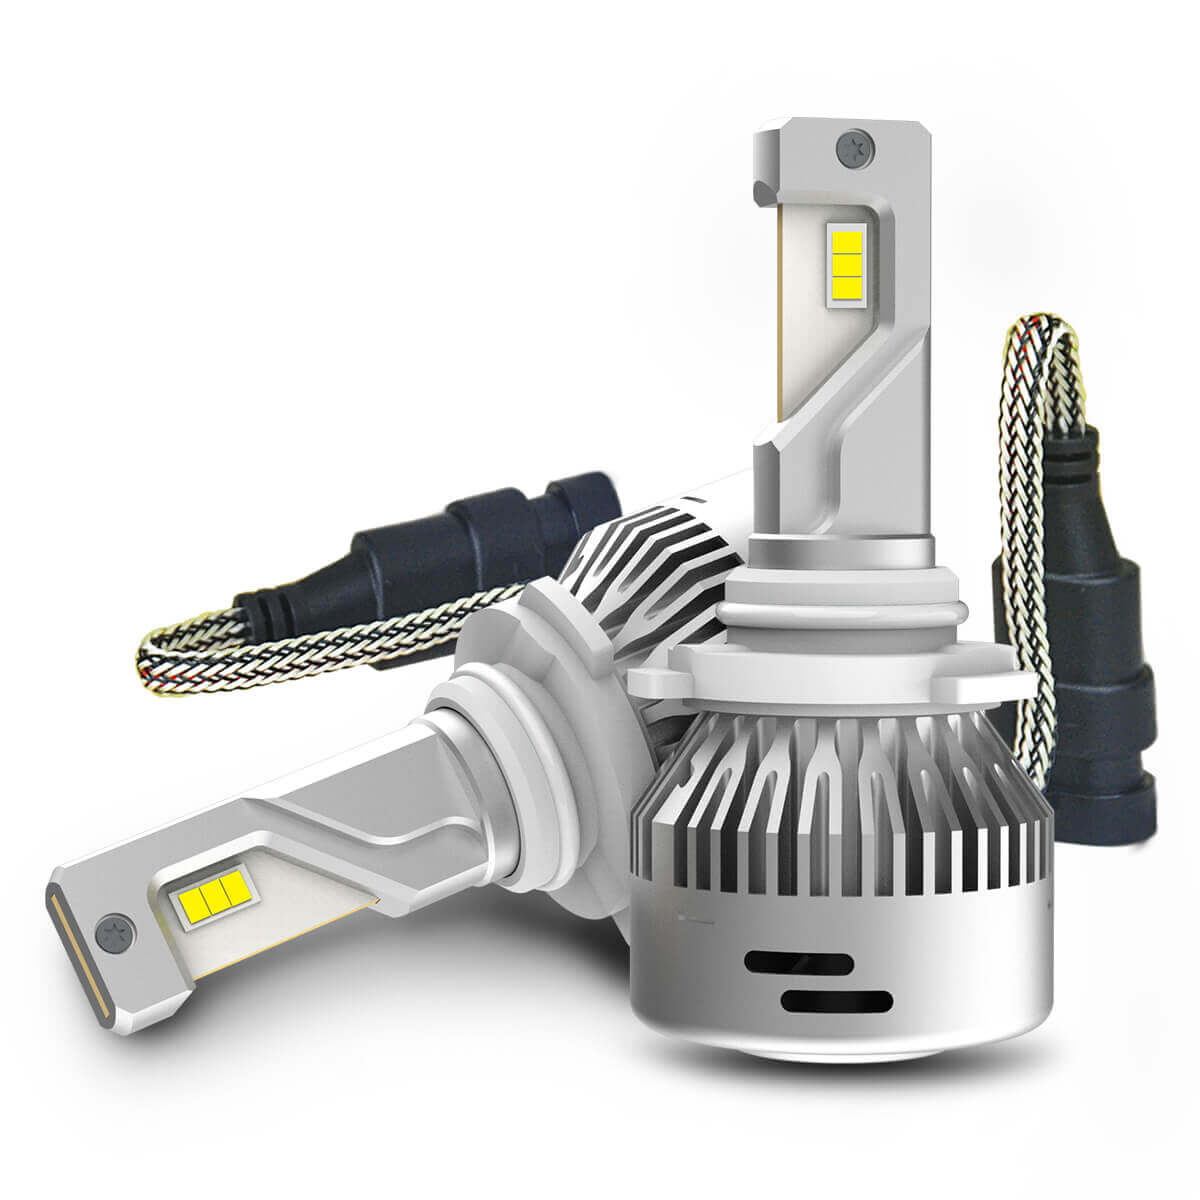 Lasfit 9005 HB3 LED Headlight Bulbs, Switchback High Beam Flip Chip 2 Modes  60W 6000LM,LDplus Series | 2 Bulbs